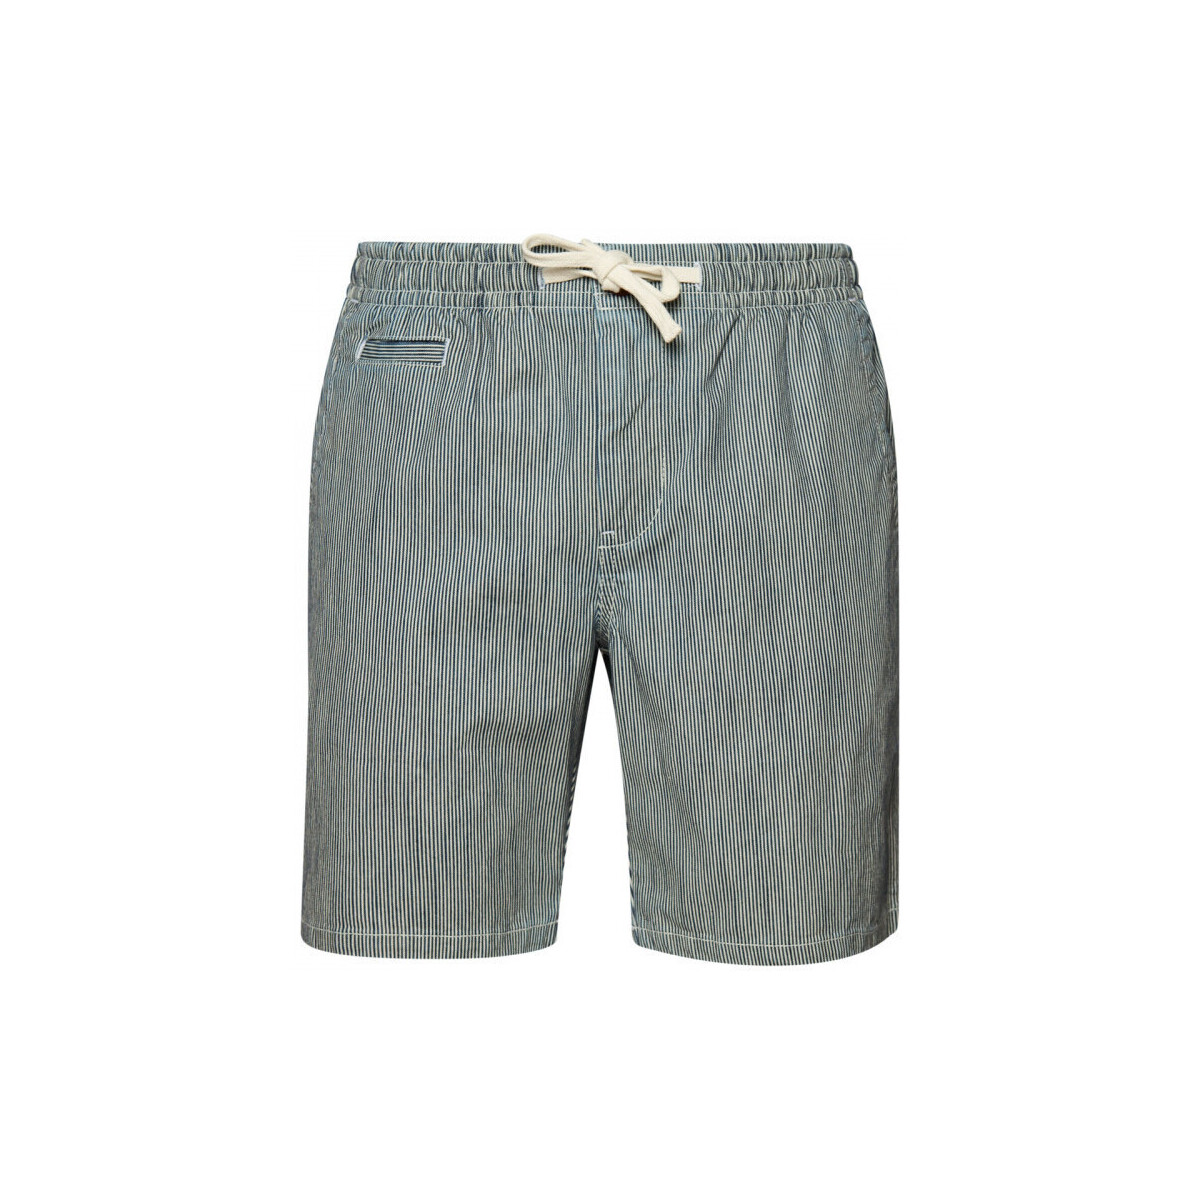 textil Hombre Shorts / Bermudas Superdry Vintage overdyed Azul